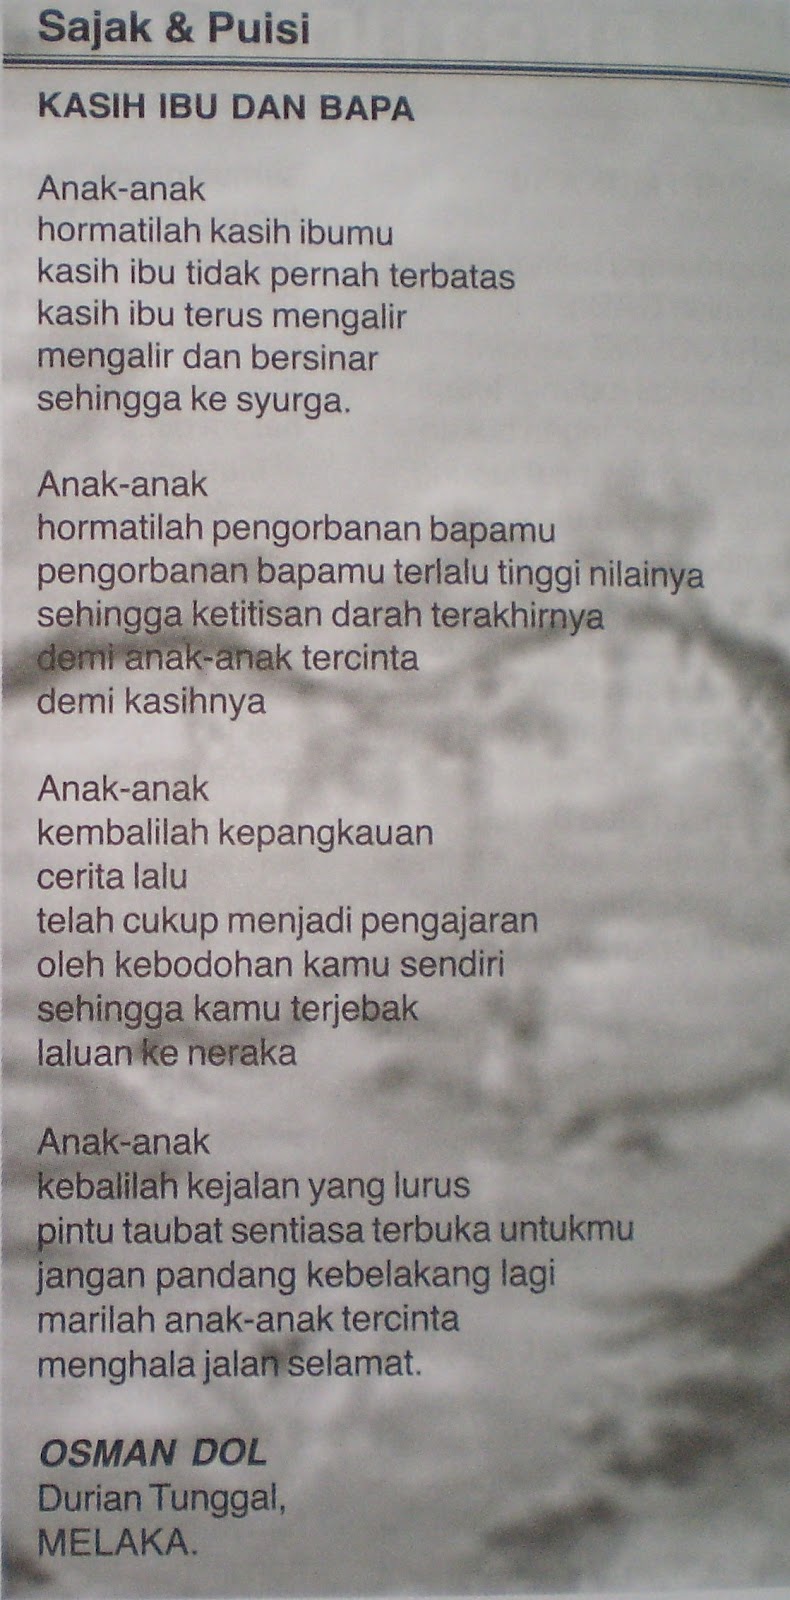 Sajak Ibu dan Bapa Seronoknya Belajar Bahasa Melayu 